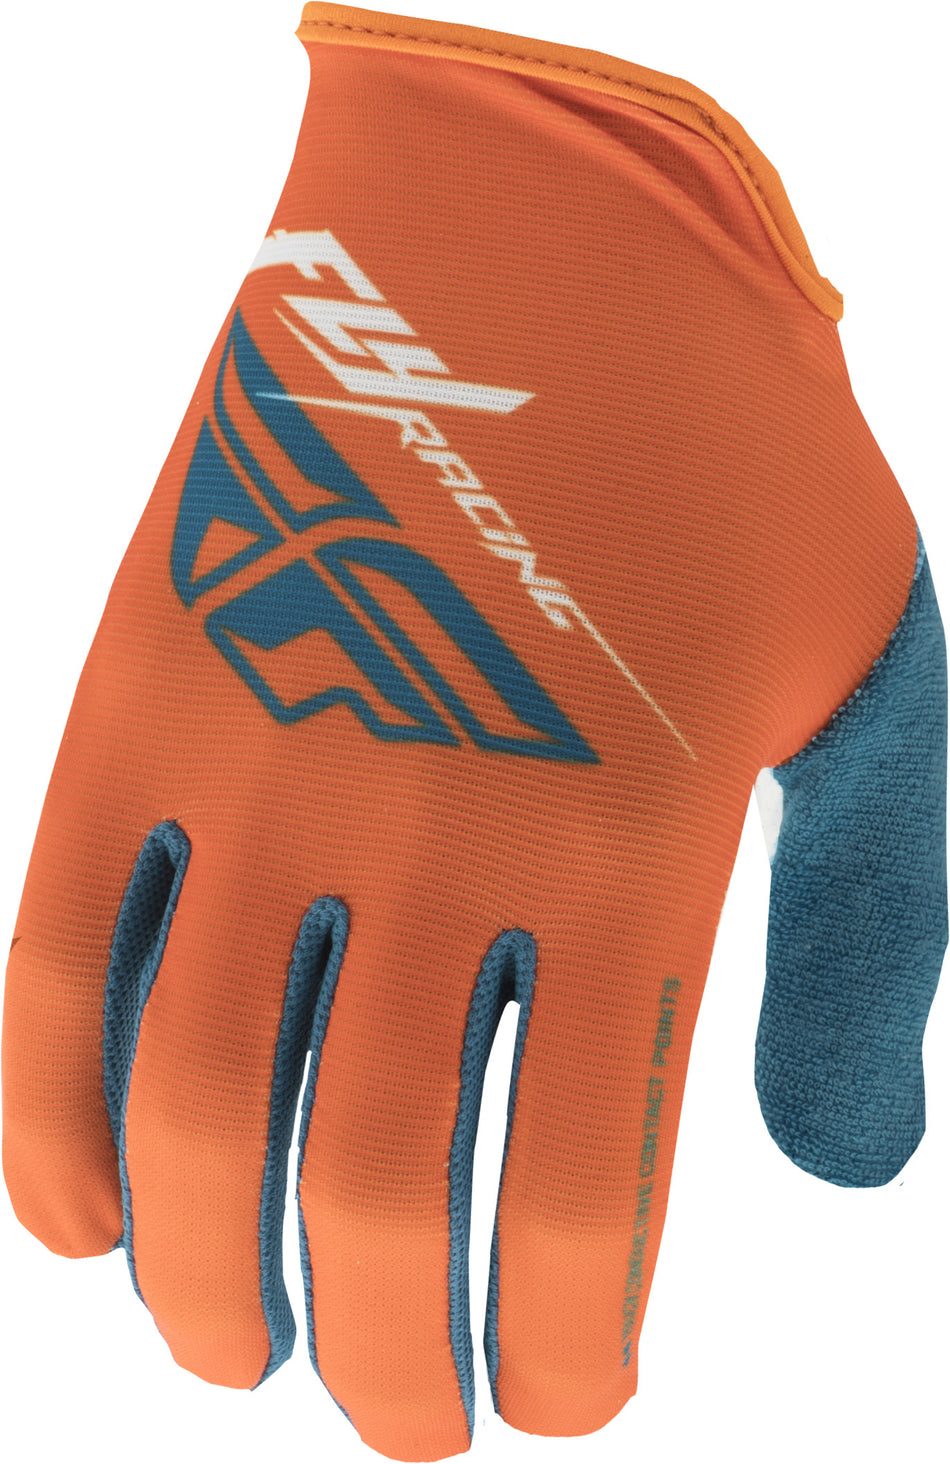 FLY RACING Media Gloves Orange/Teal/White Sz 12 350-09812